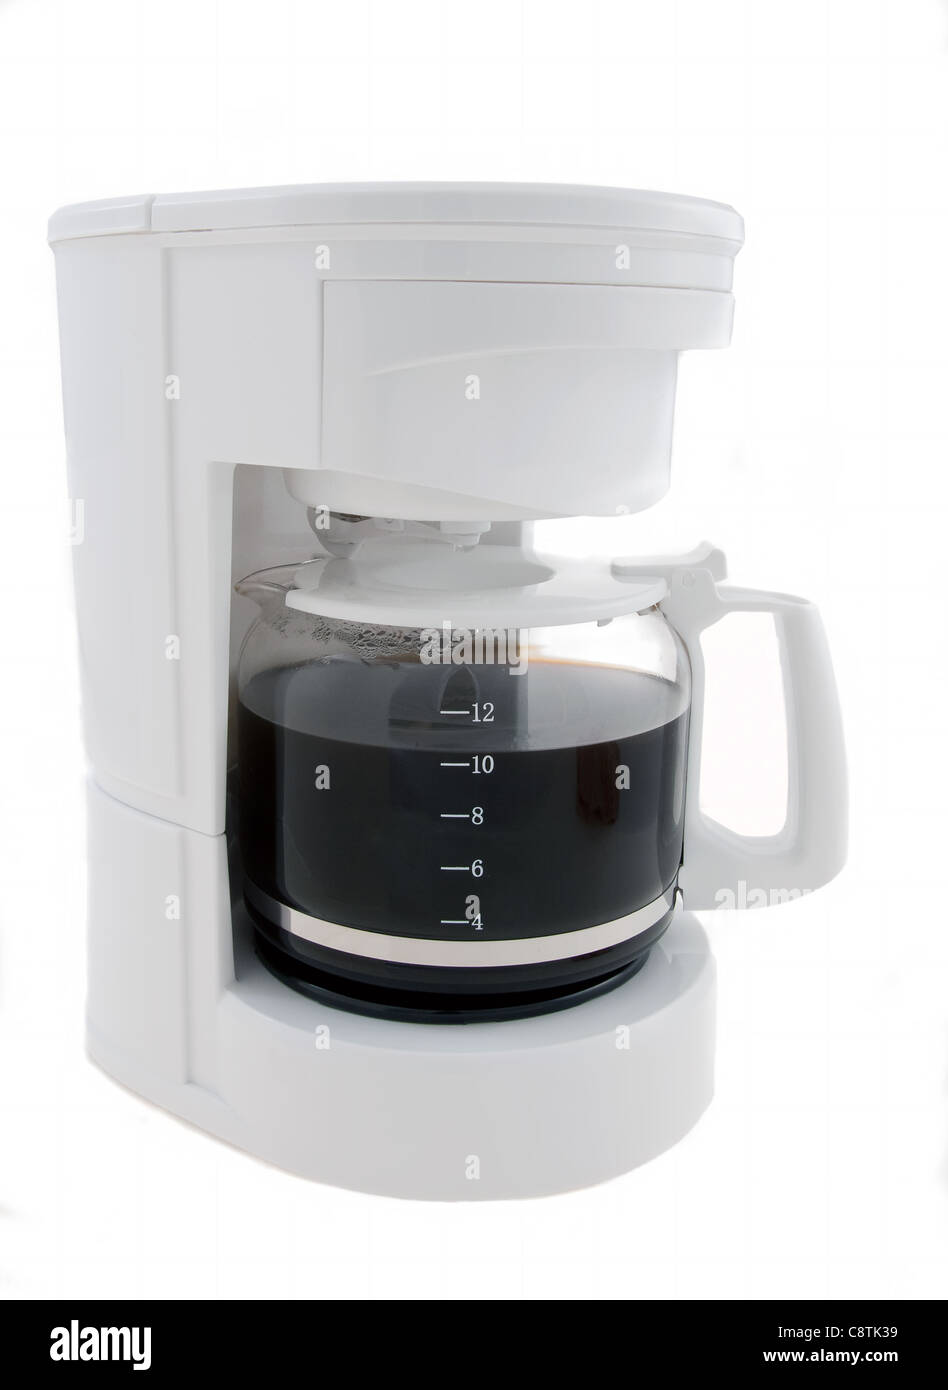 https://c8.alamy.com/comp/C8TK39/morning-coffee-maker-C8TK39.jpg